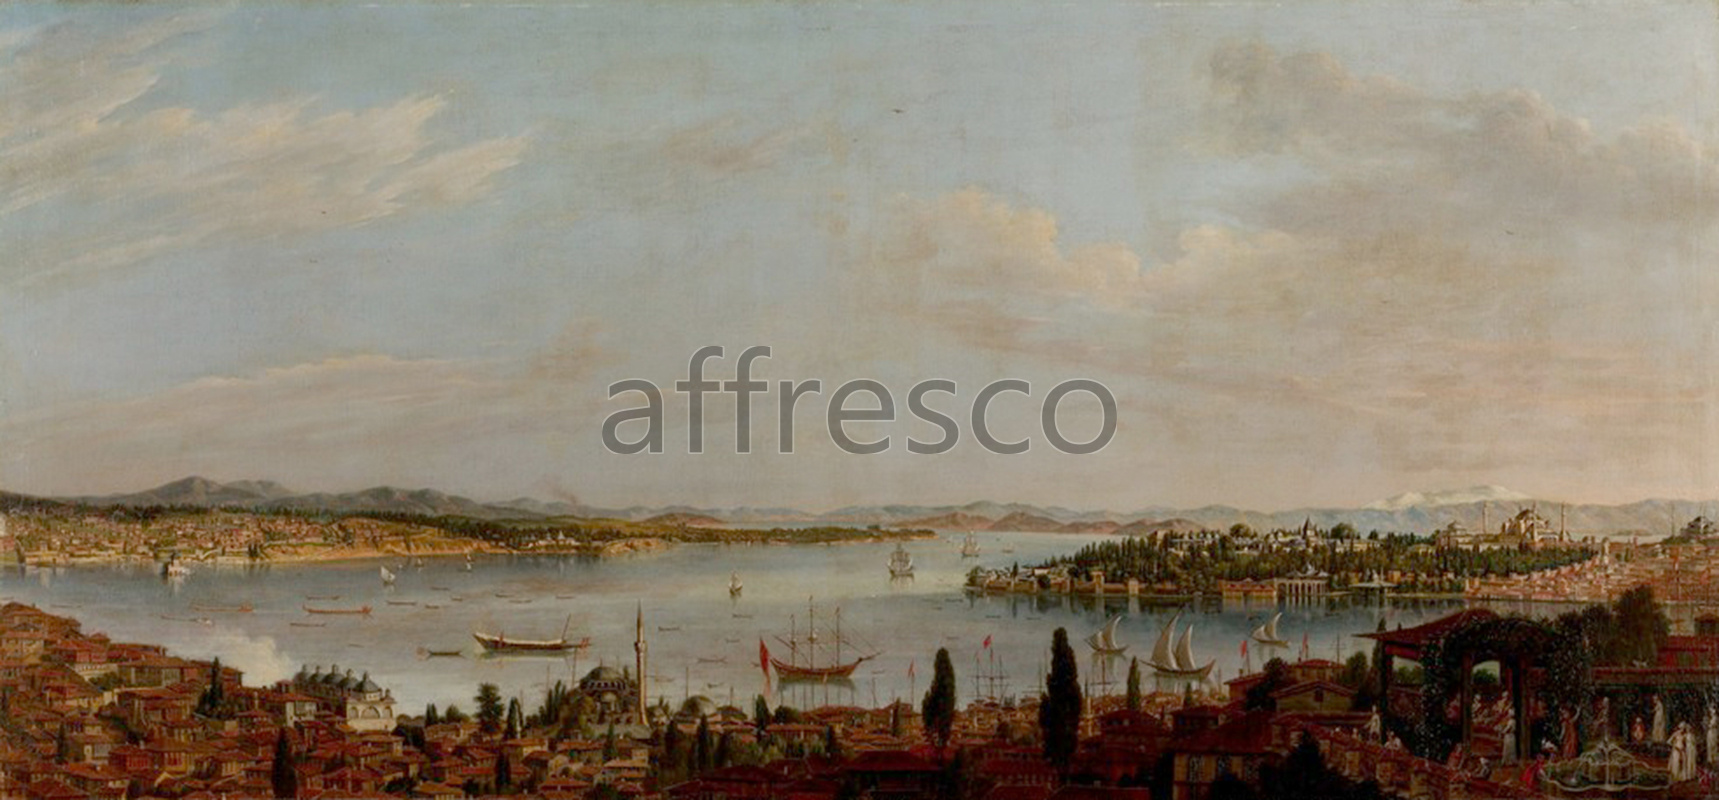 Каталог Аффреско, Классические пейзажиAntoine de Favray, Панорама Стамбула | арт. Antoine de Favray, Panorama of Istanbul